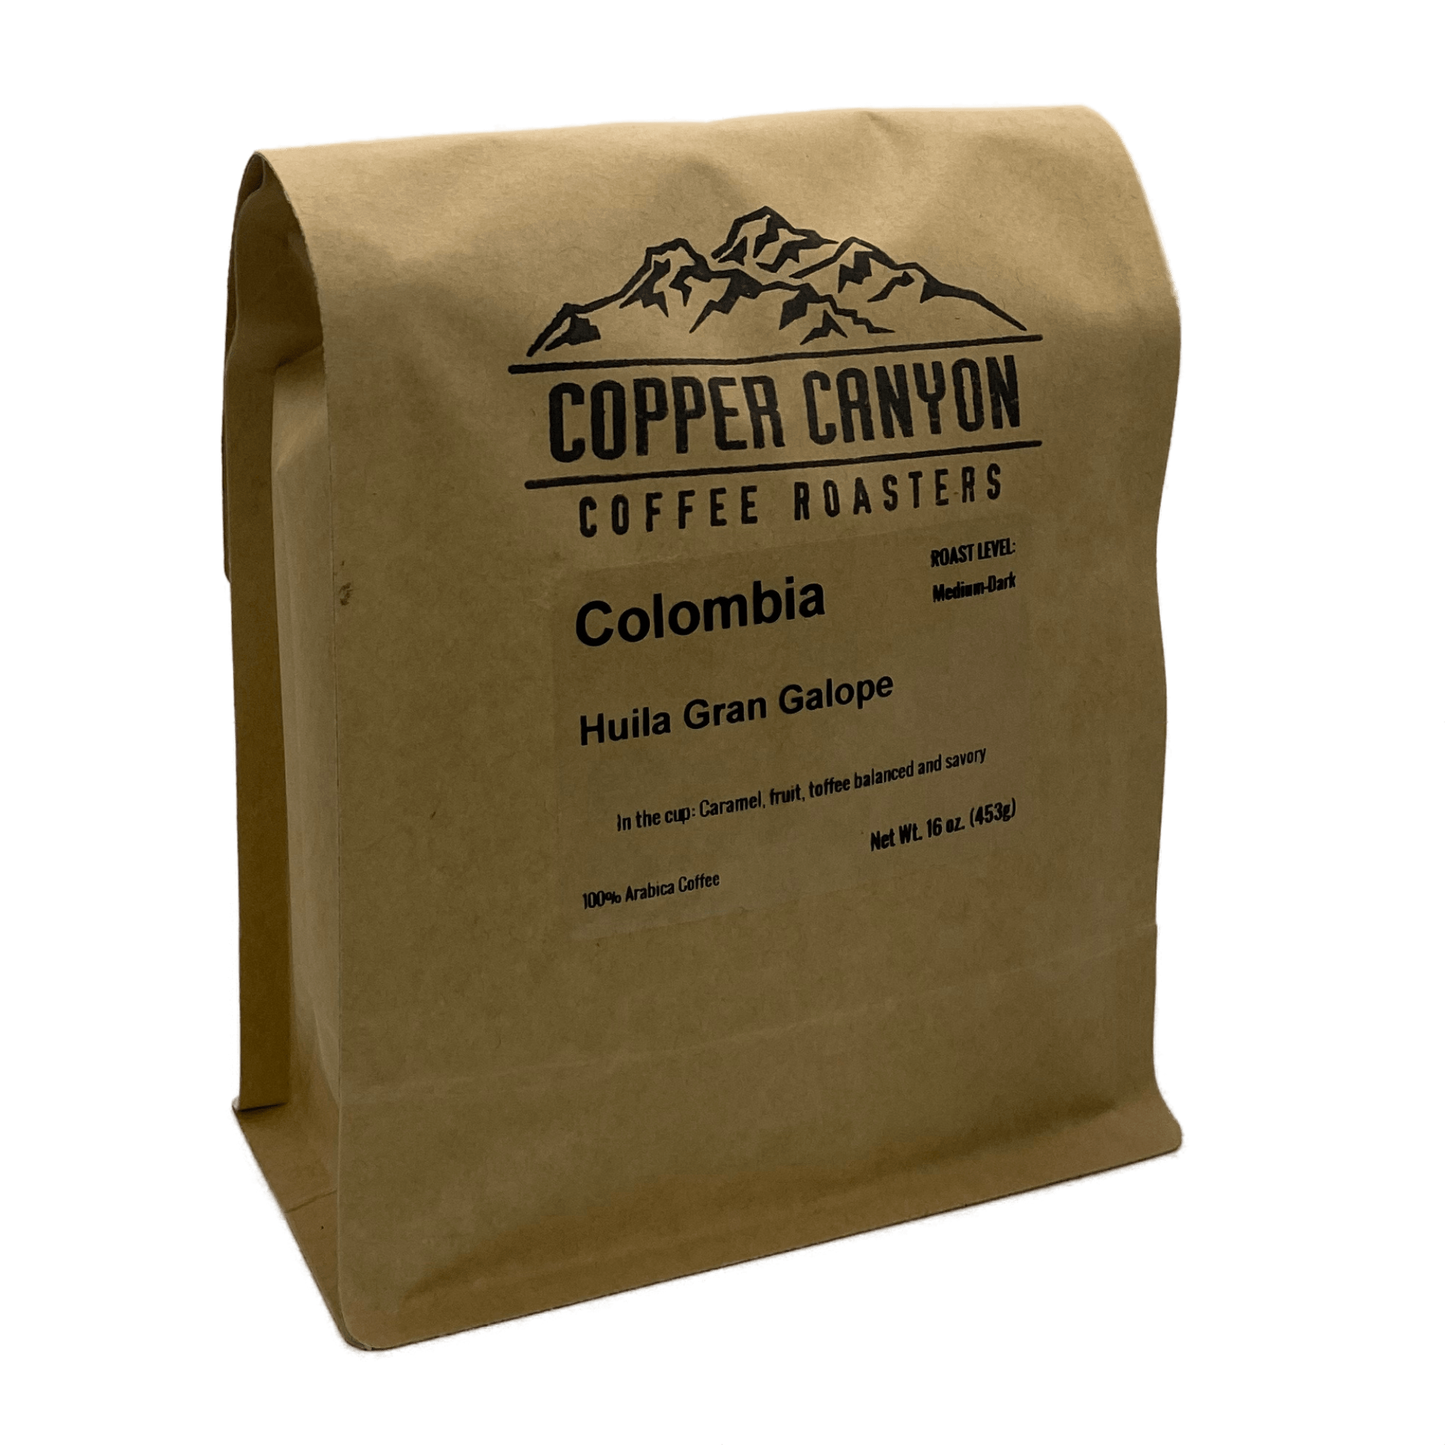 16 oz bag of Colombia single origin, medium roast coffee